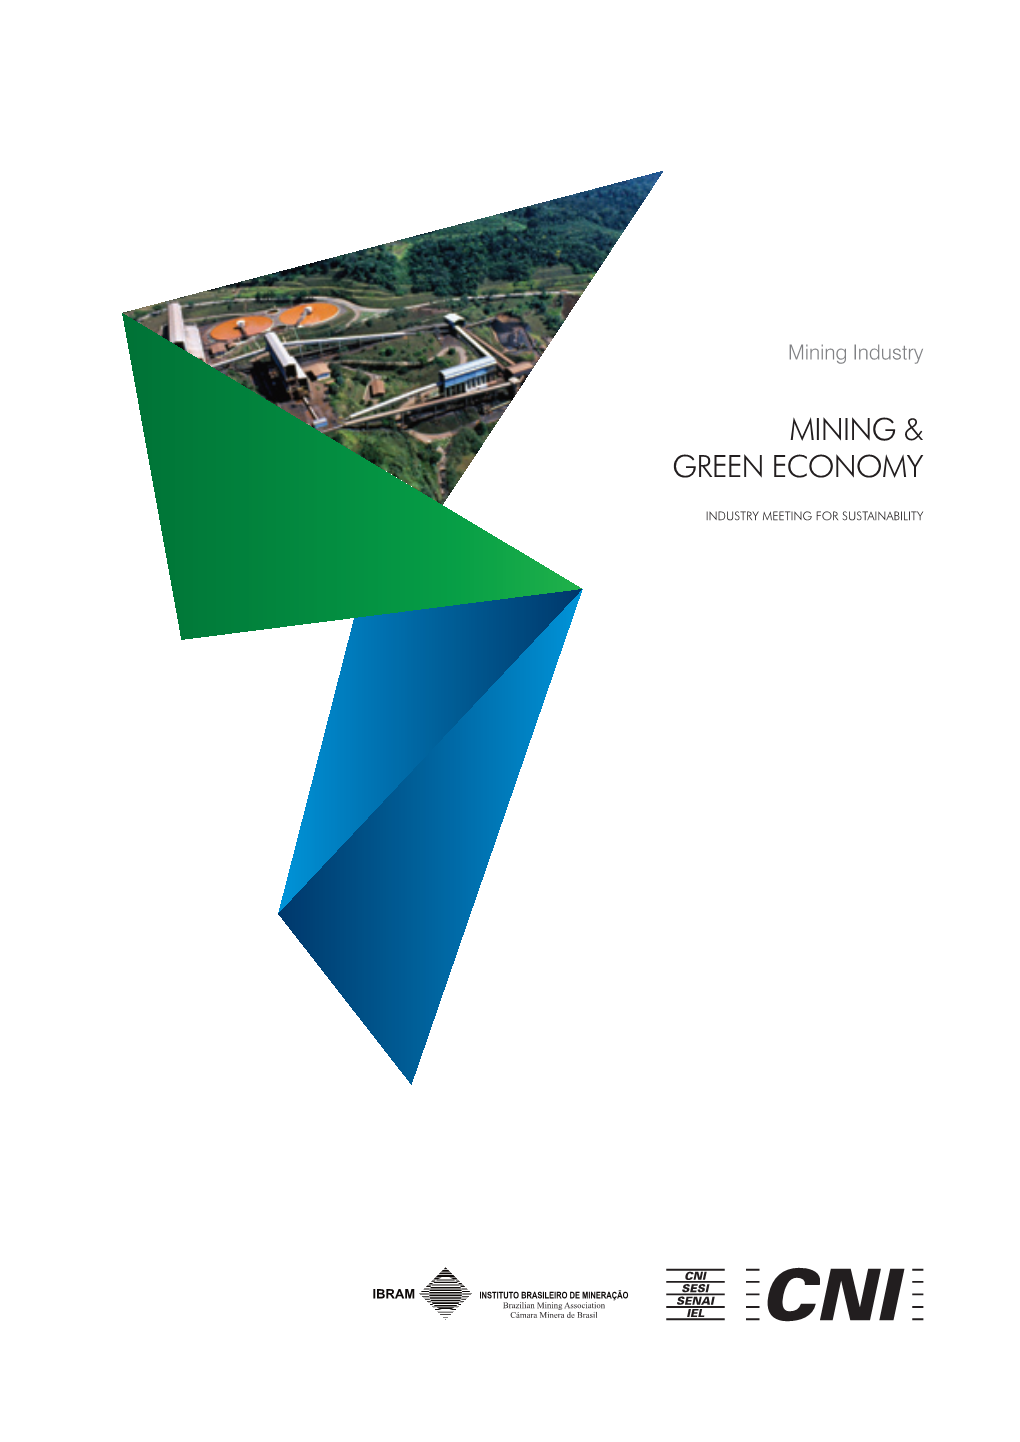 Mining & Green Economy